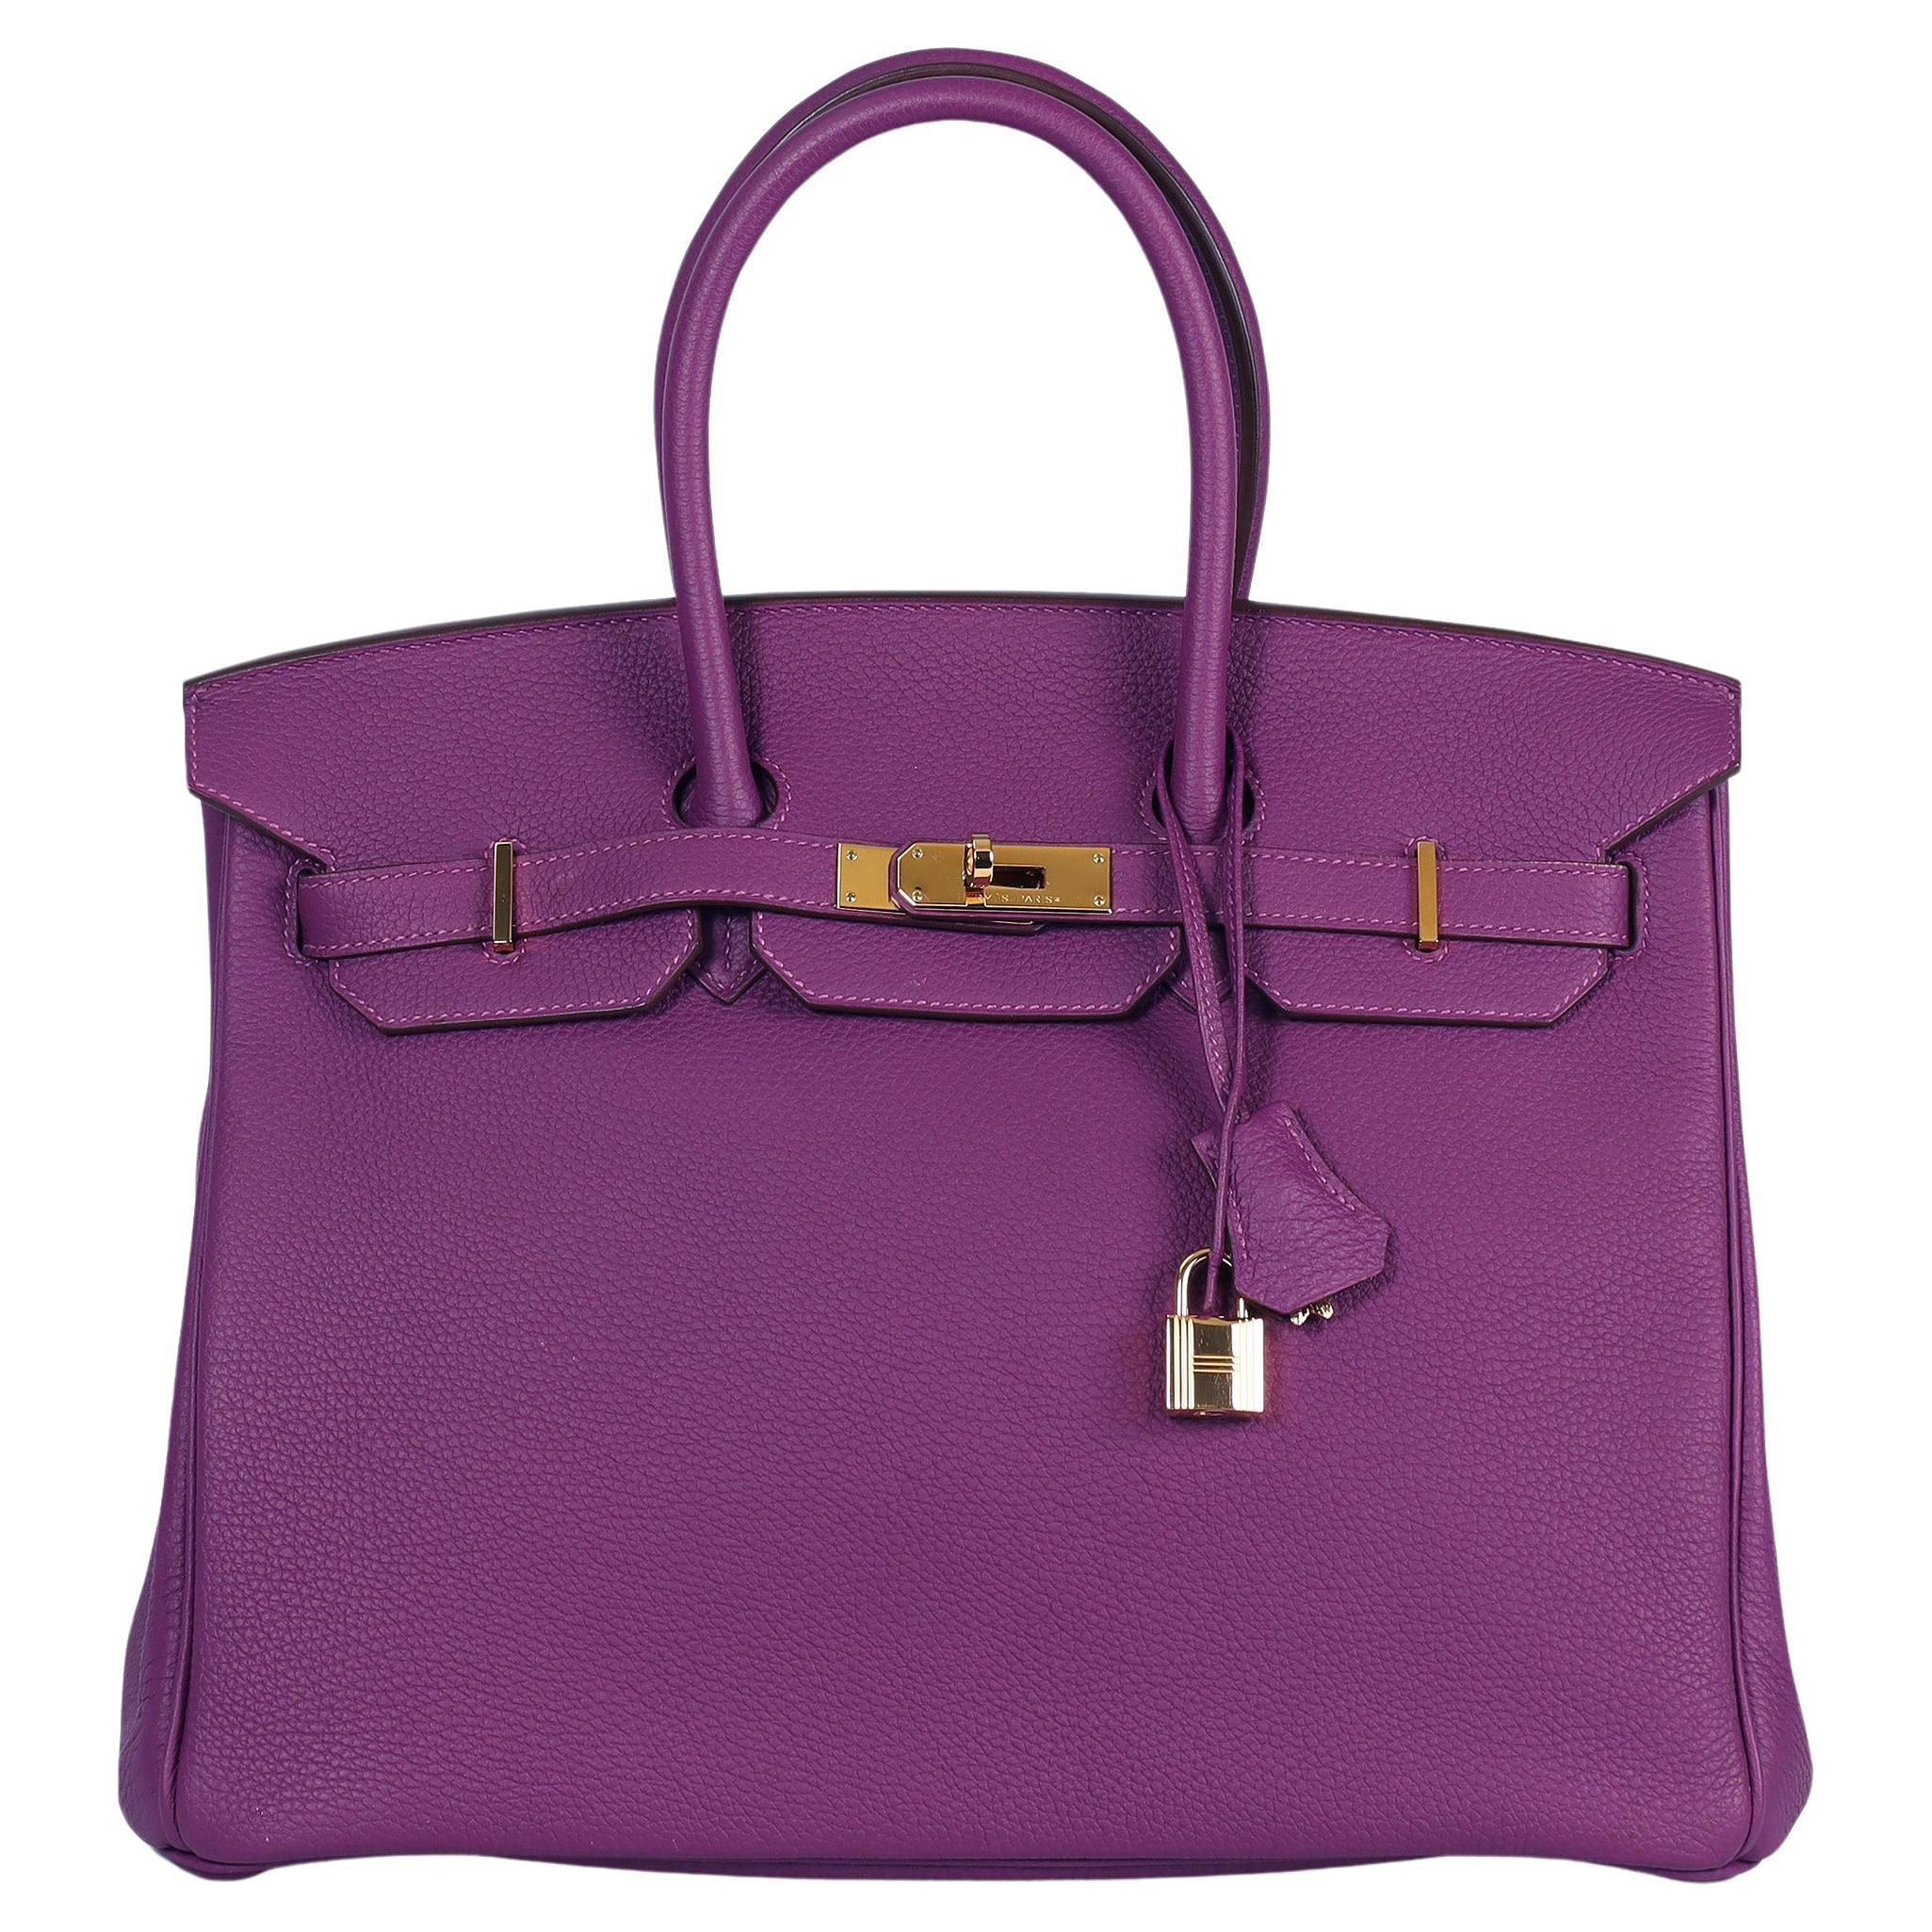 Hermès 2014 Birkin 35cm Togo Leather Bag For Sale